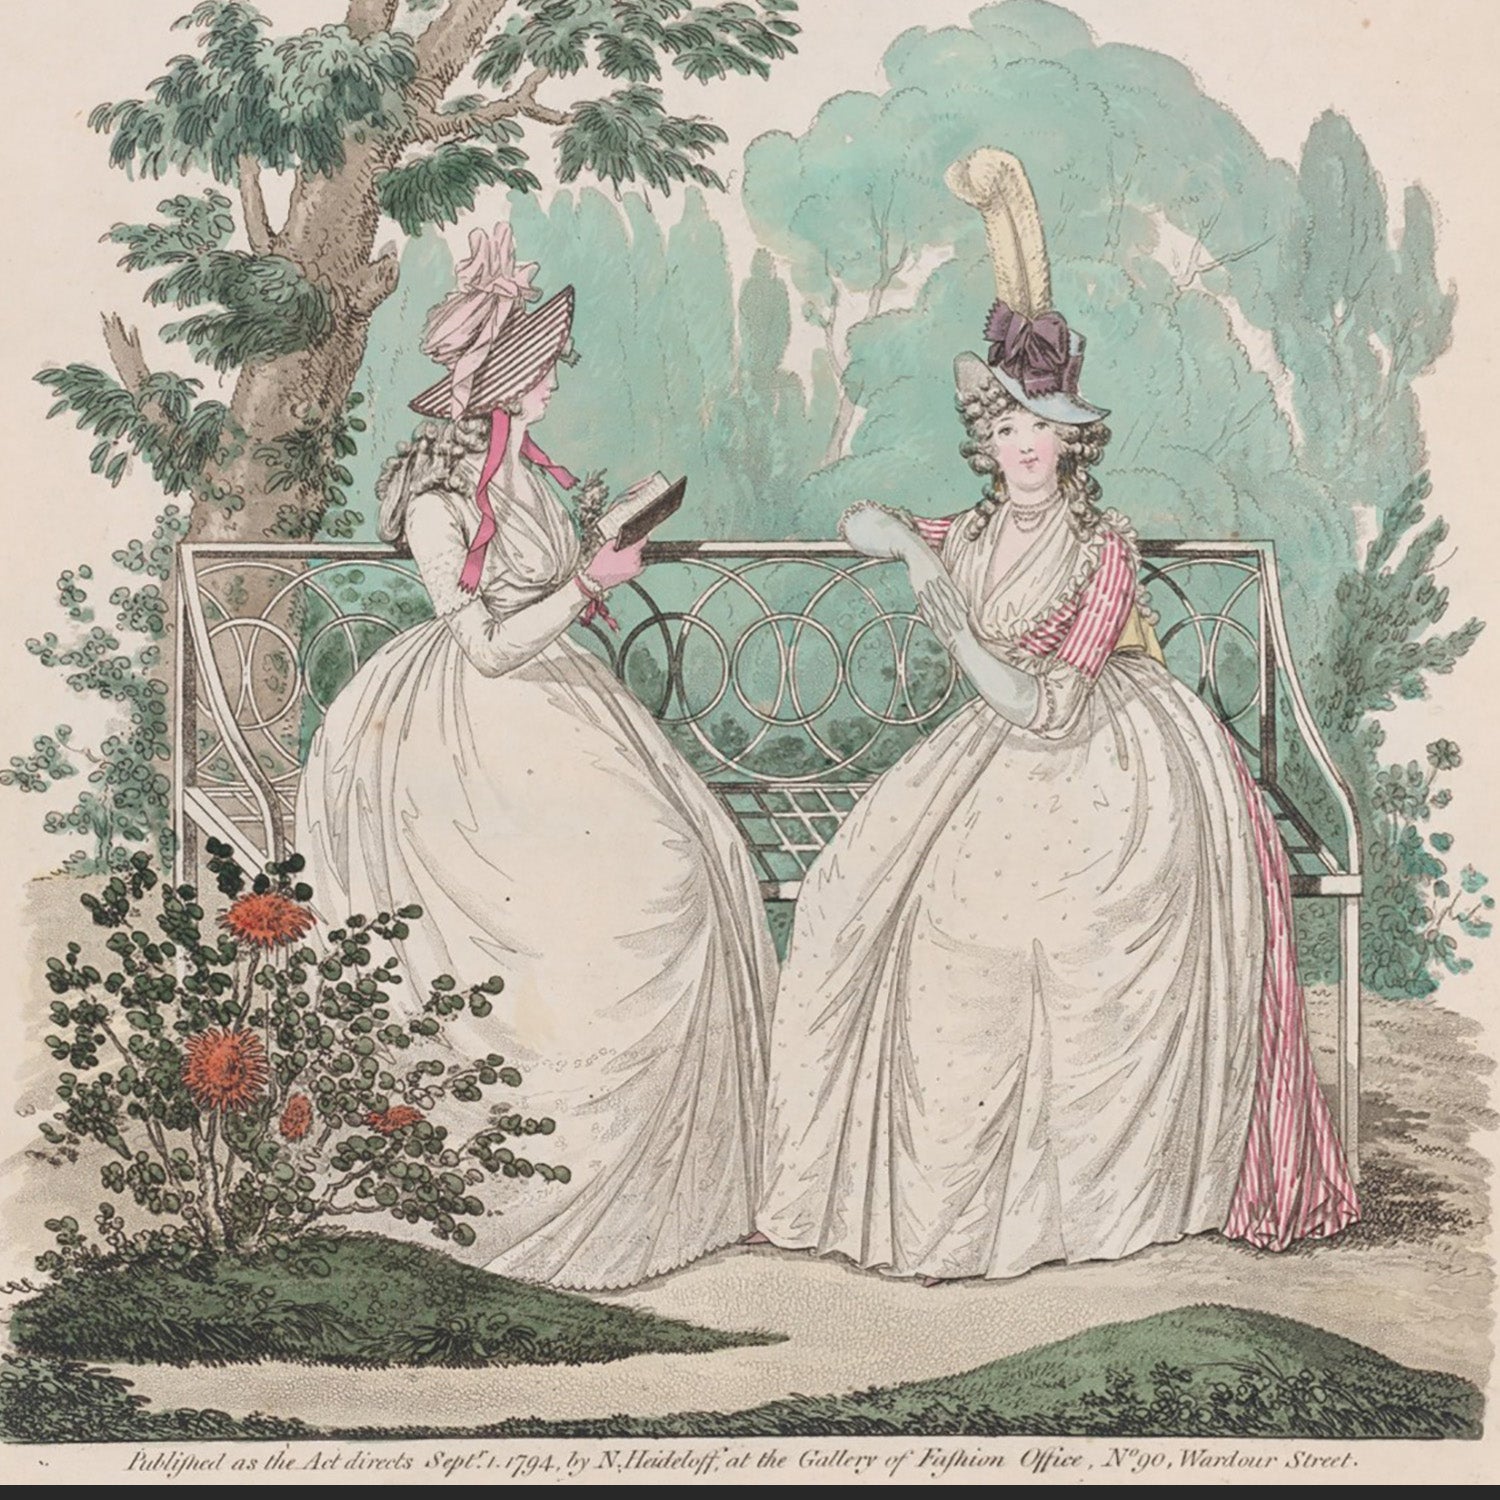 Stitching La Mode: Patterns and Dressmaking From Fashion Plates of  1785-1795